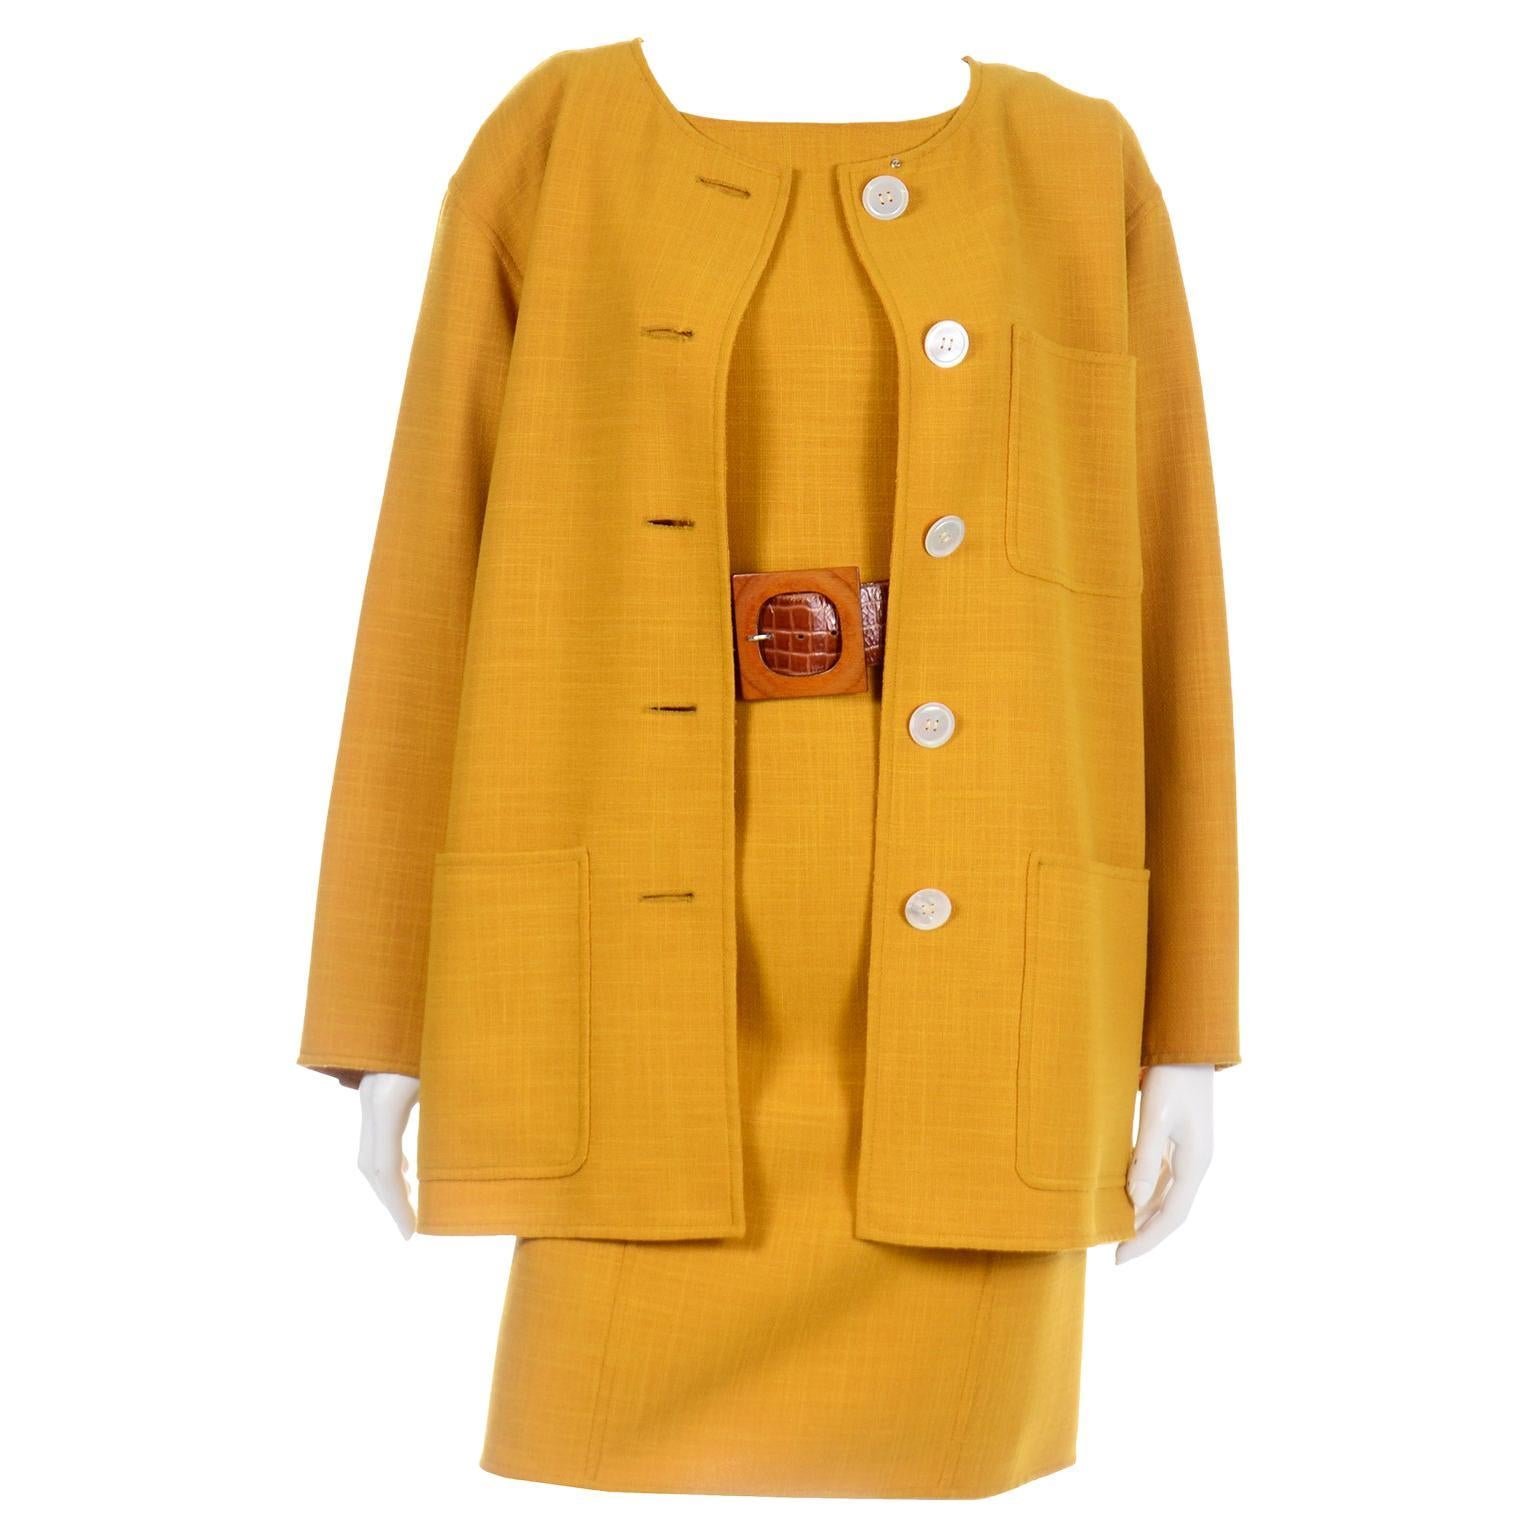 Oscar de la Renta Vintage Mustard Yellow Dress and Jacket Suit with Belt